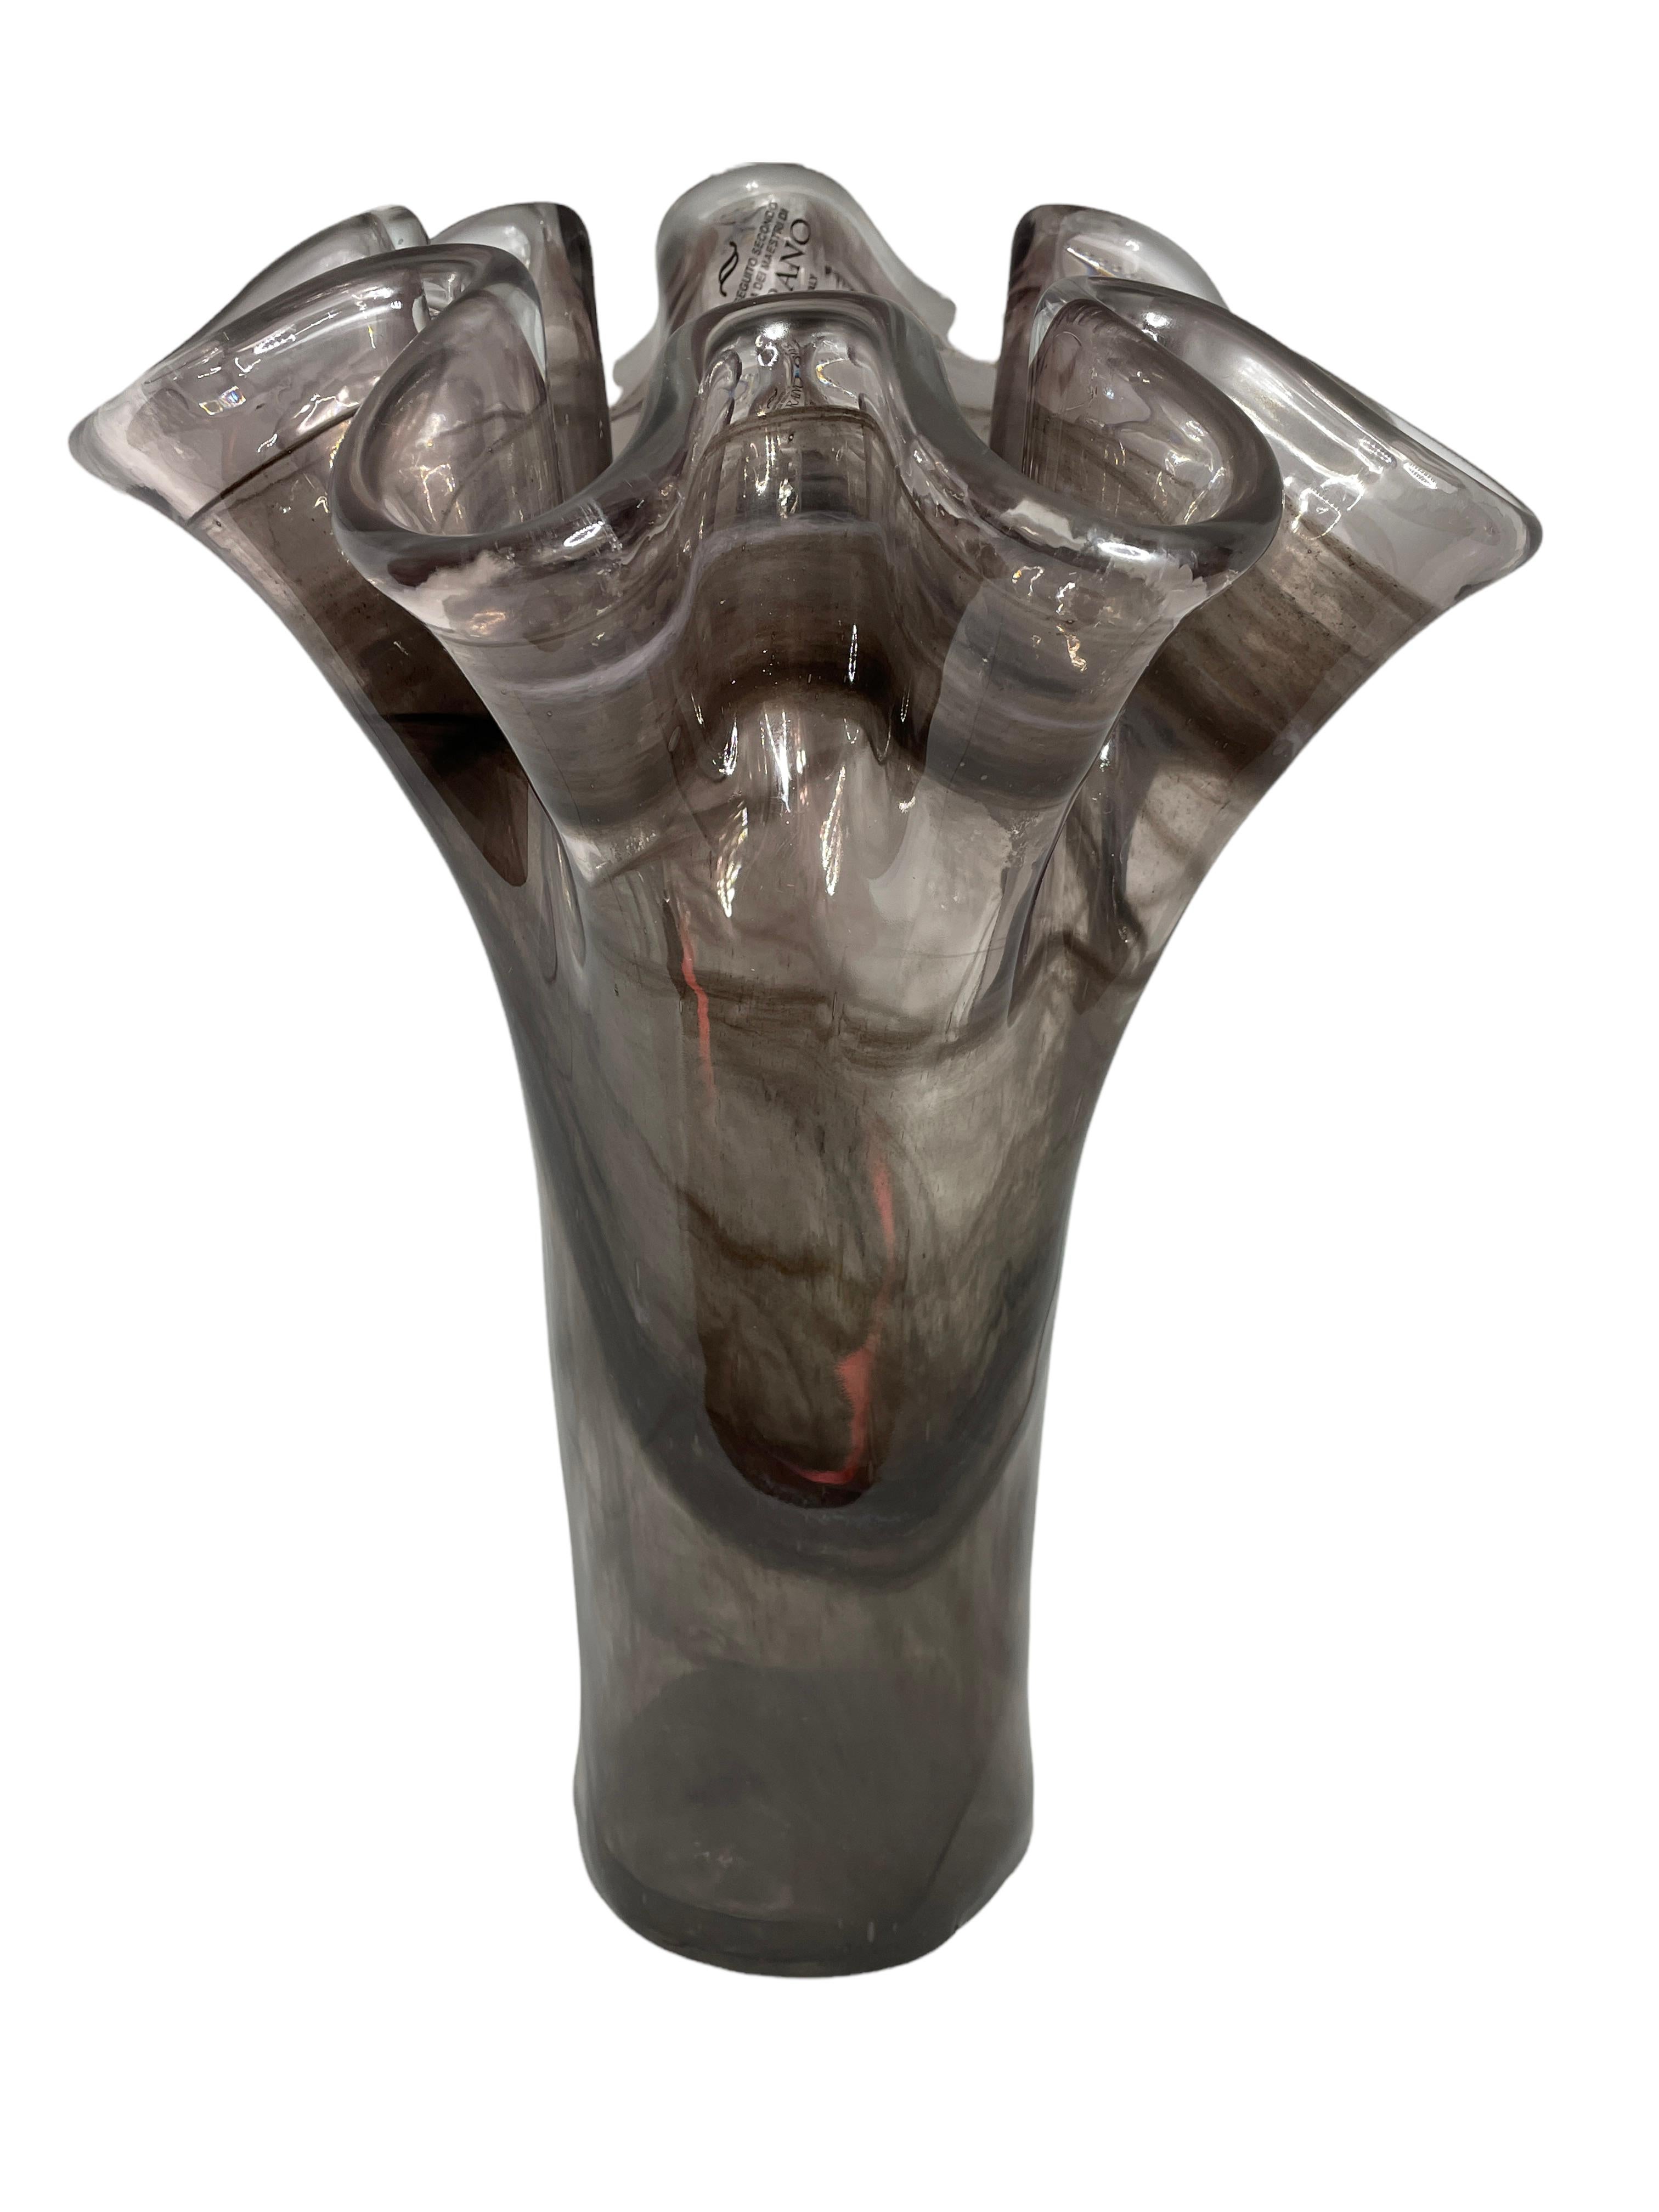 Beautiful Murano hand blown Italian art glass handkerchief vase with black, grey and clear glass swirls in the glass. Measures: 10 5/8